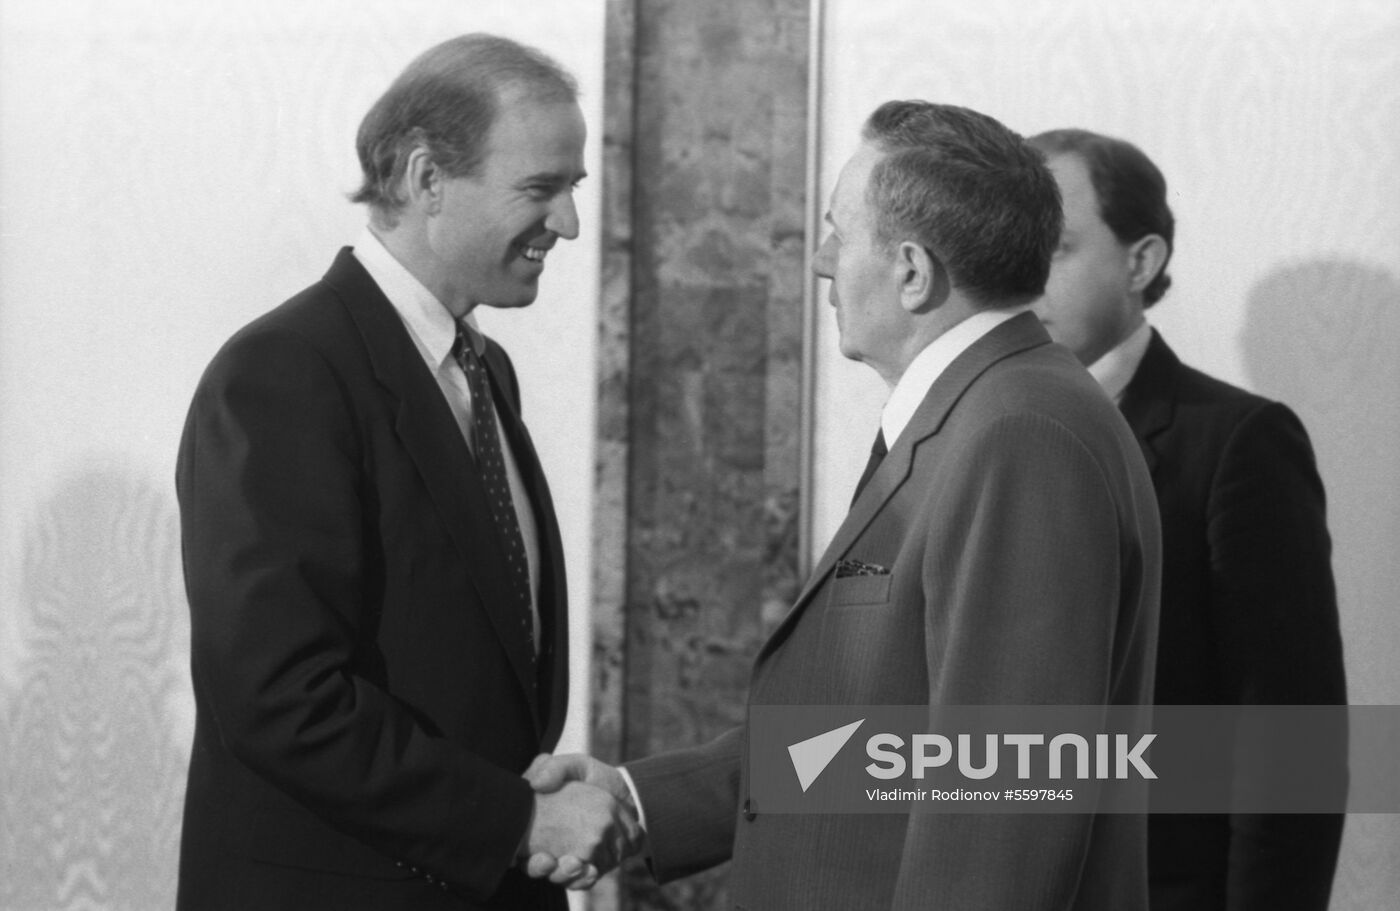 US Senator Joe Biden's visit to USSR